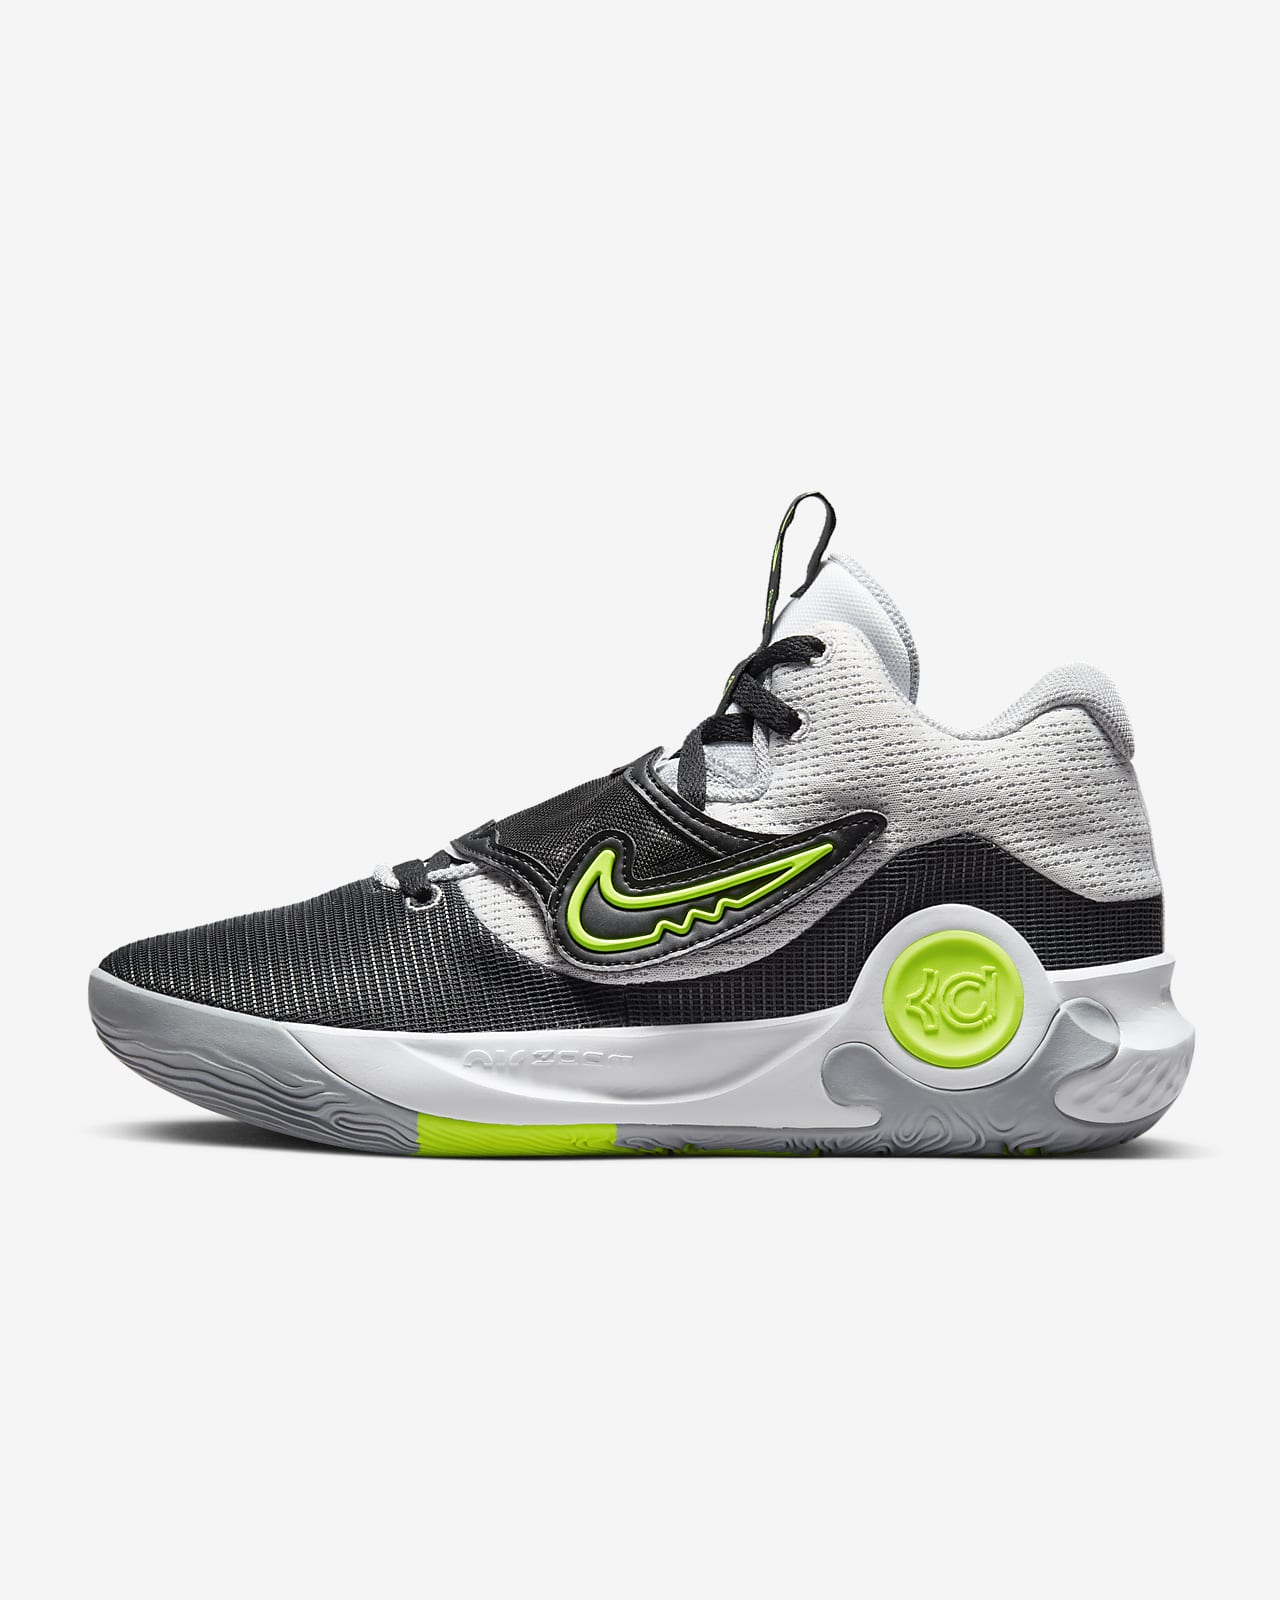 KD 5 Basketball Shoes. Nike LU